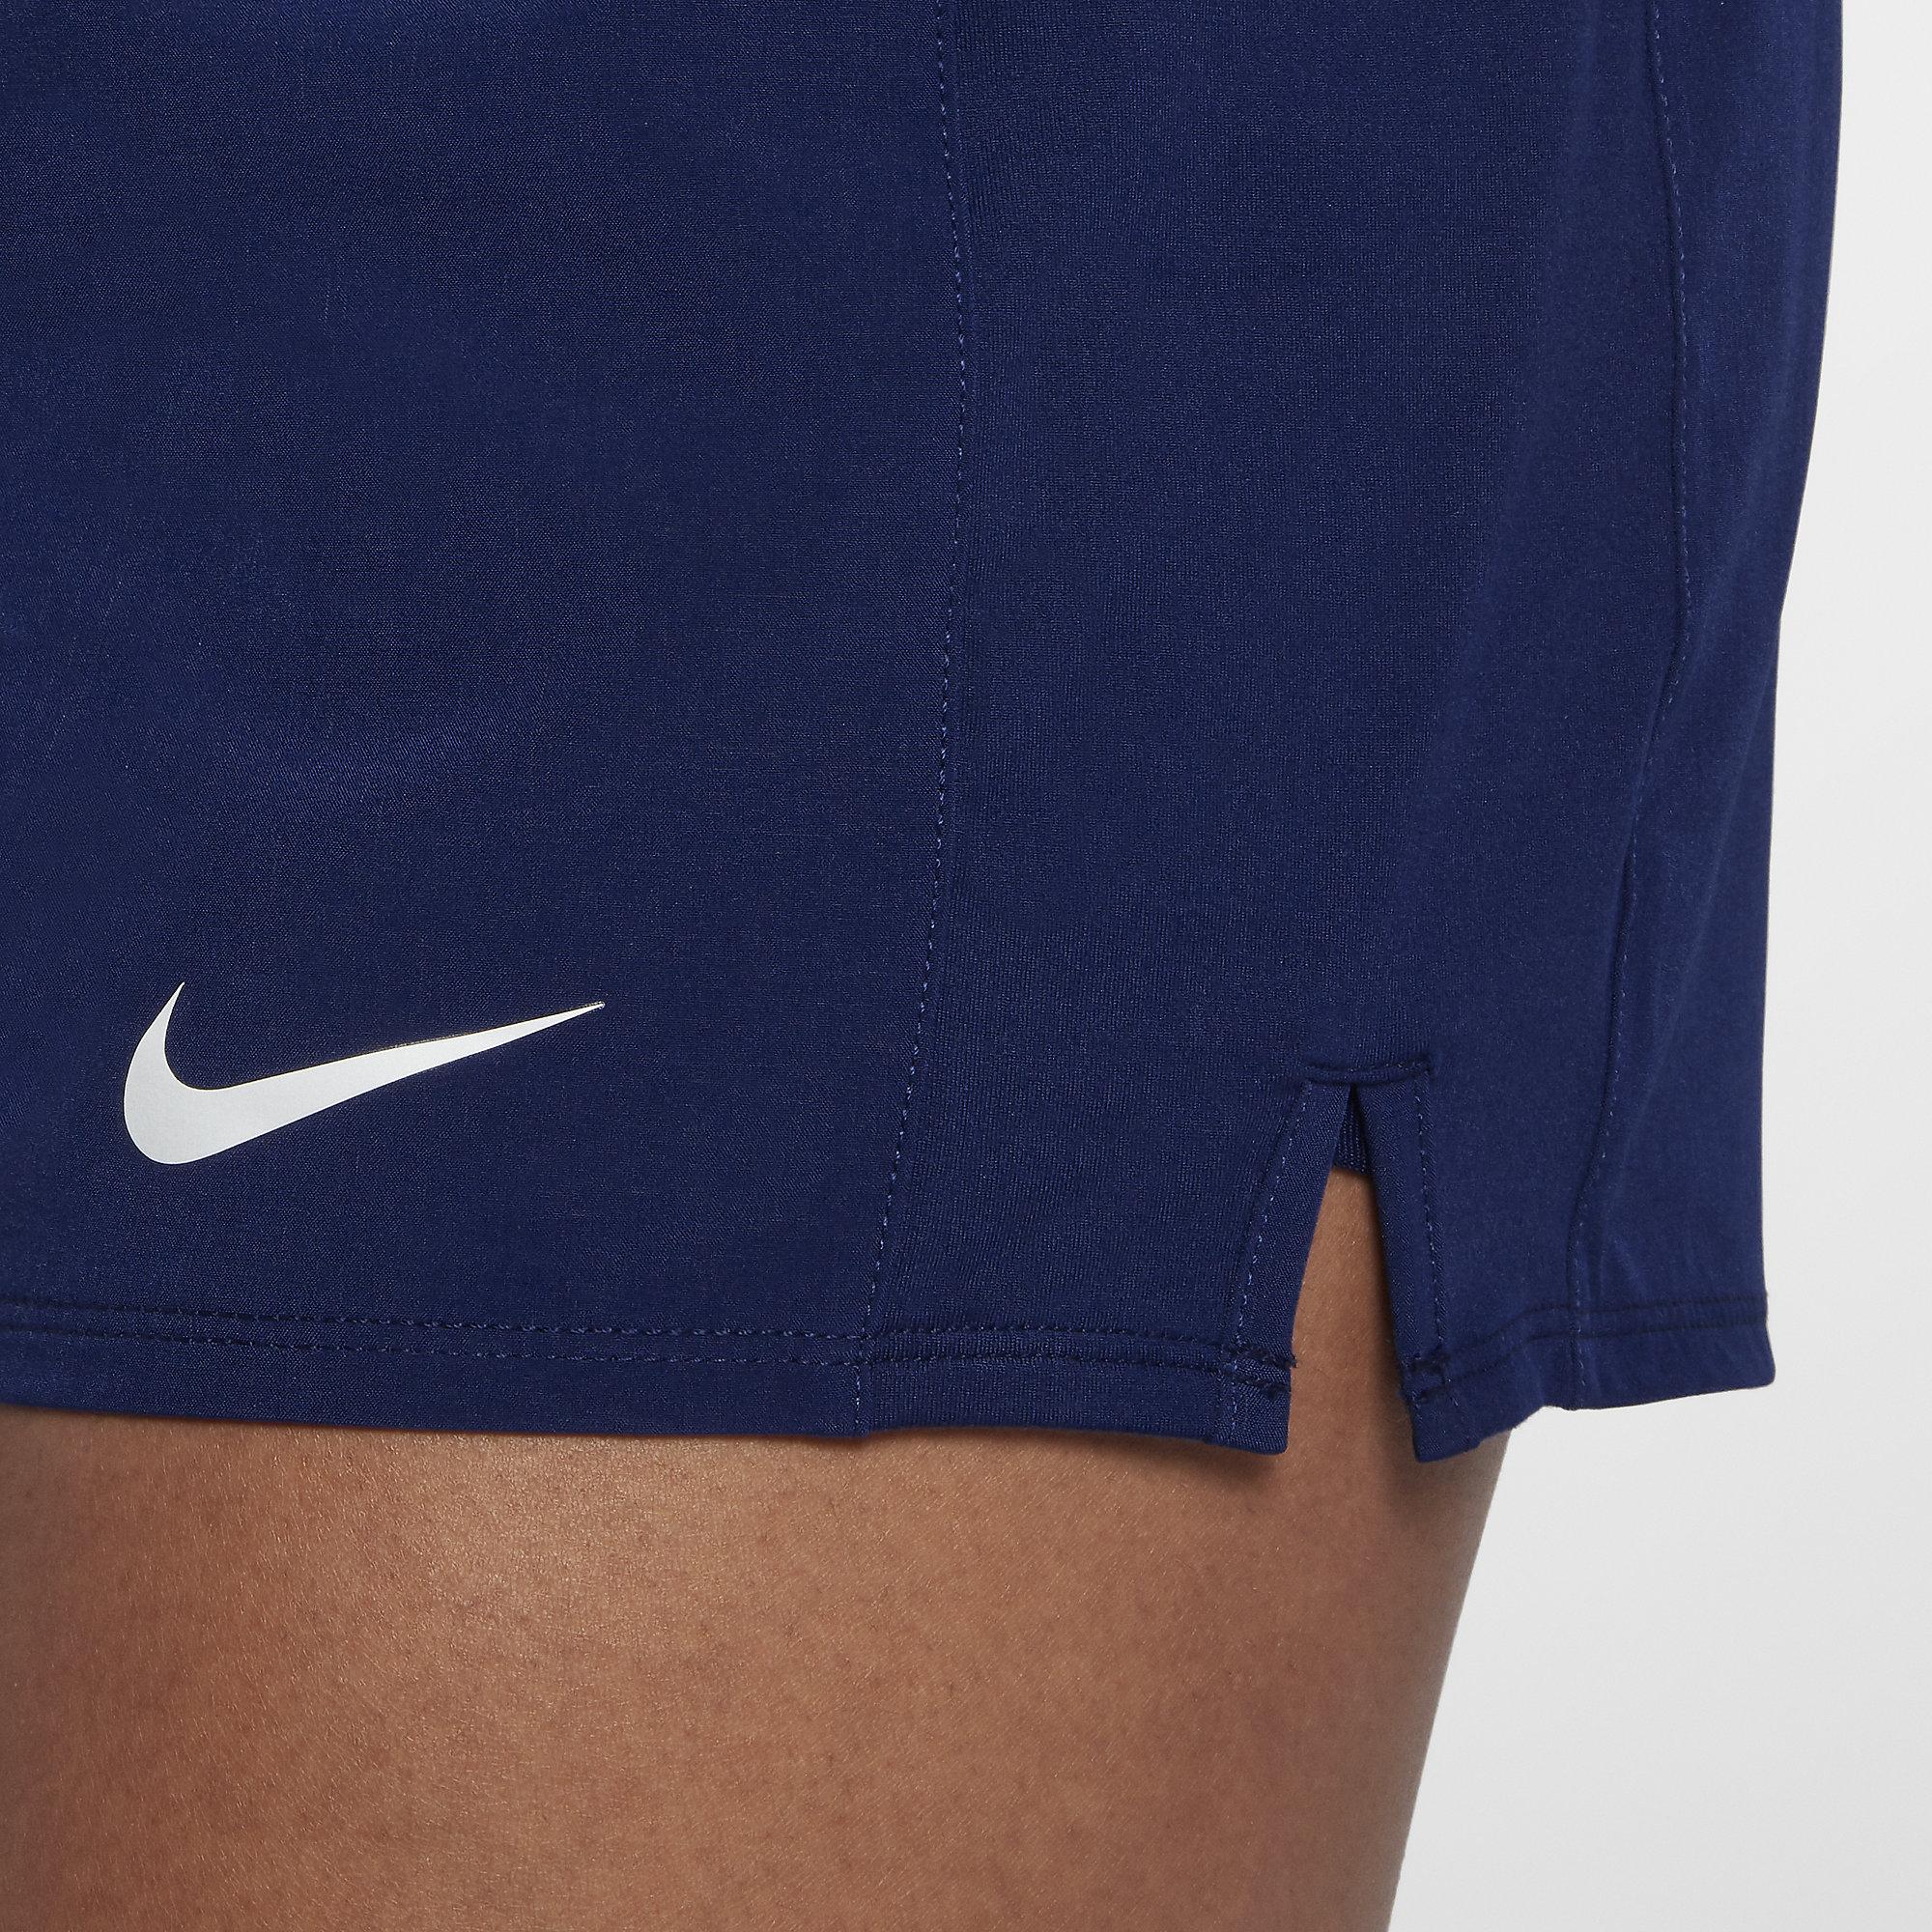 Nike Womens Flex Pure Tennis Shorts - Blue Void - Tennisnuts.com